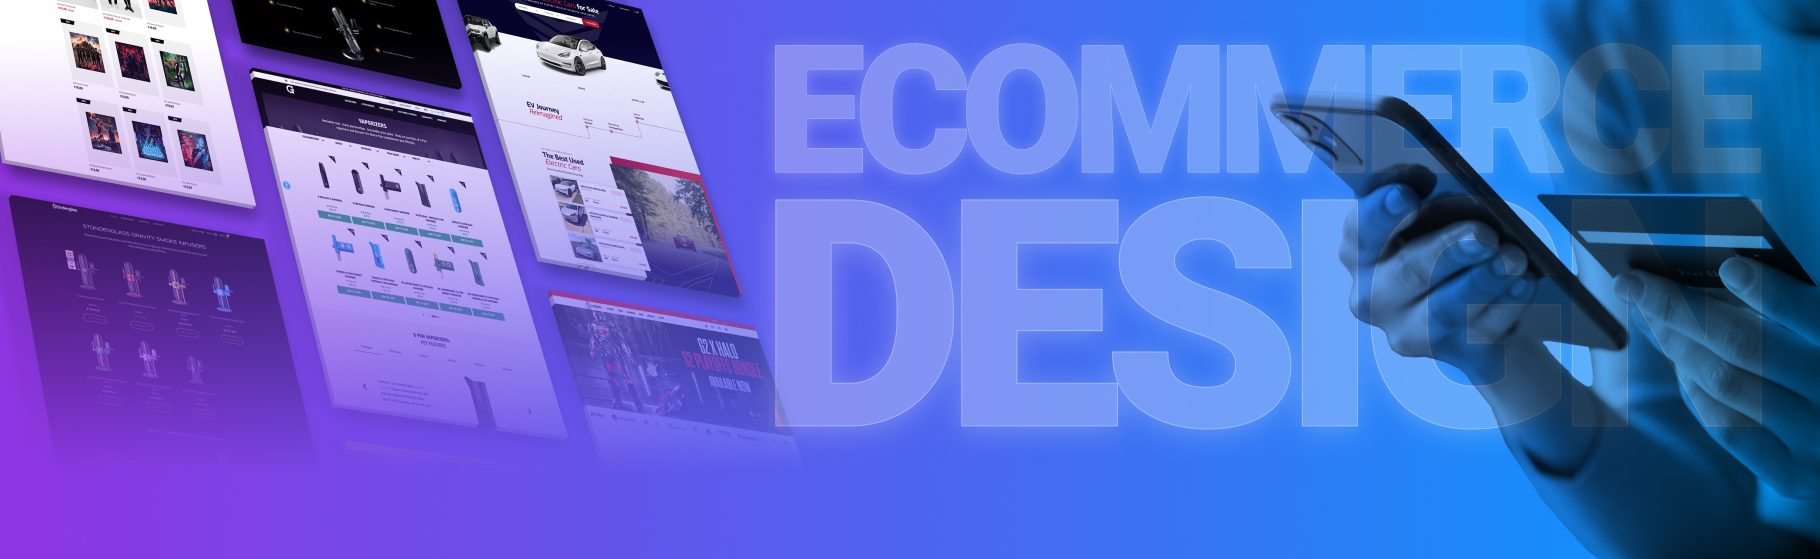 Web design company eCommerce design